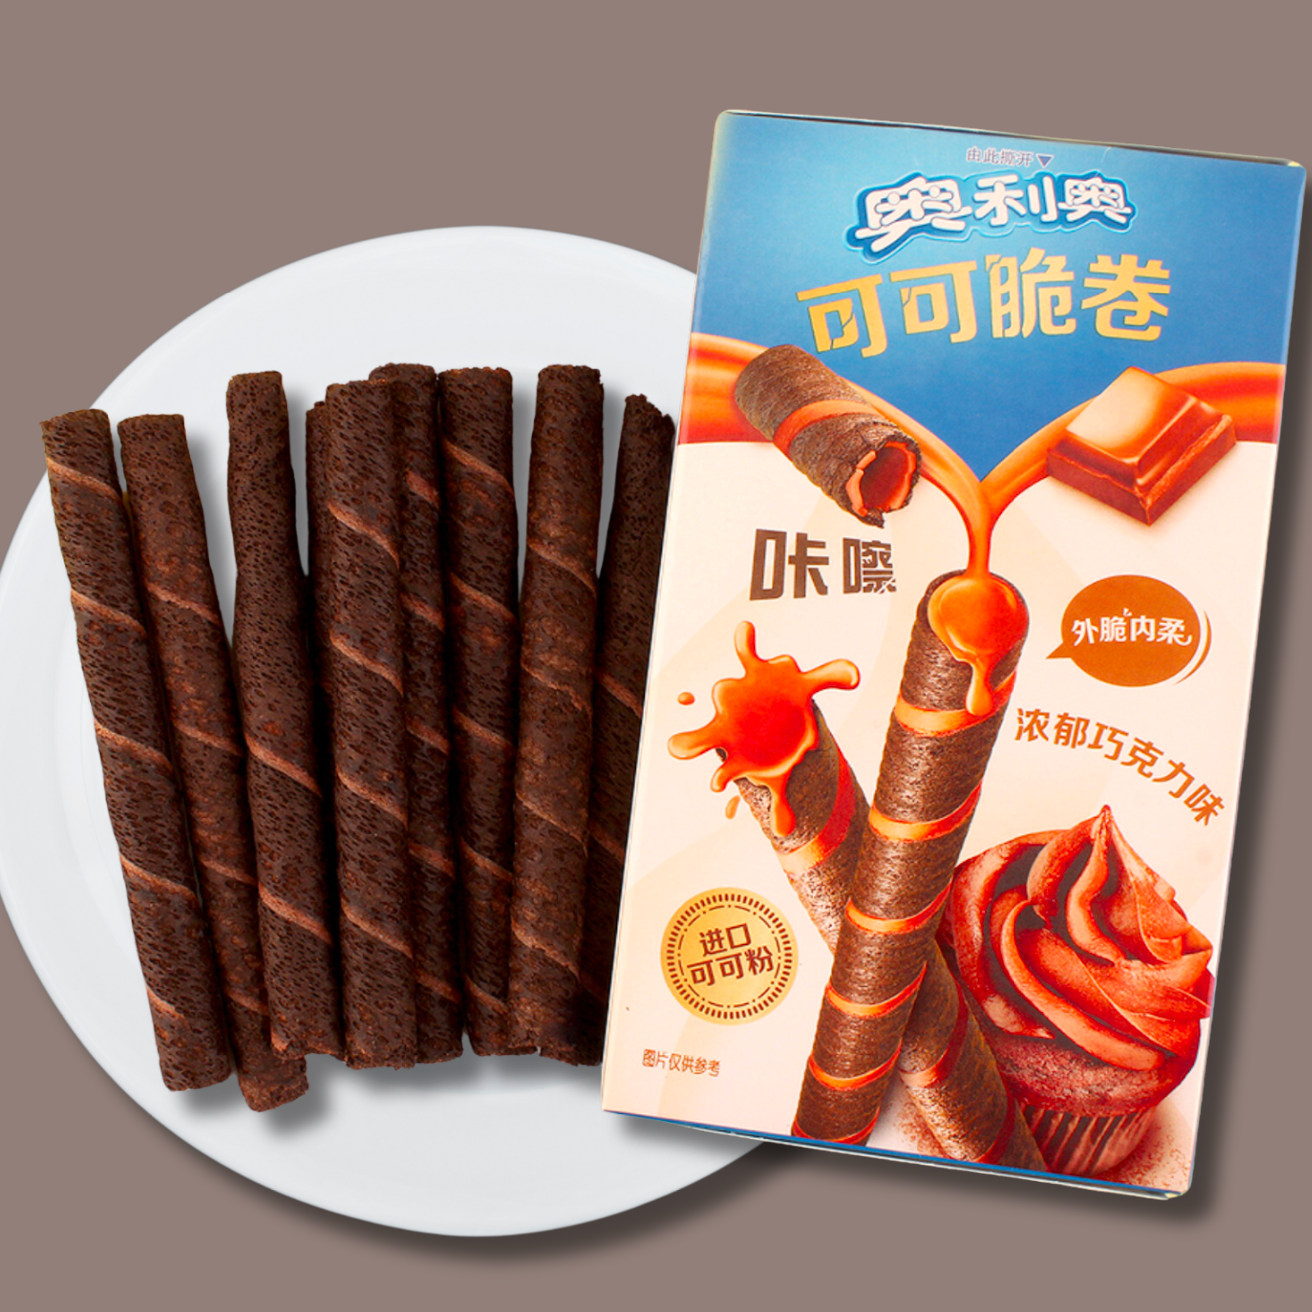 Asian Oreo Wafer Rolls – 4 Pack Variety Sampler | Limited Edition: Vanilla Mousse, Strawberry Milkshake, Japanese Matcha, Rich Chocolate